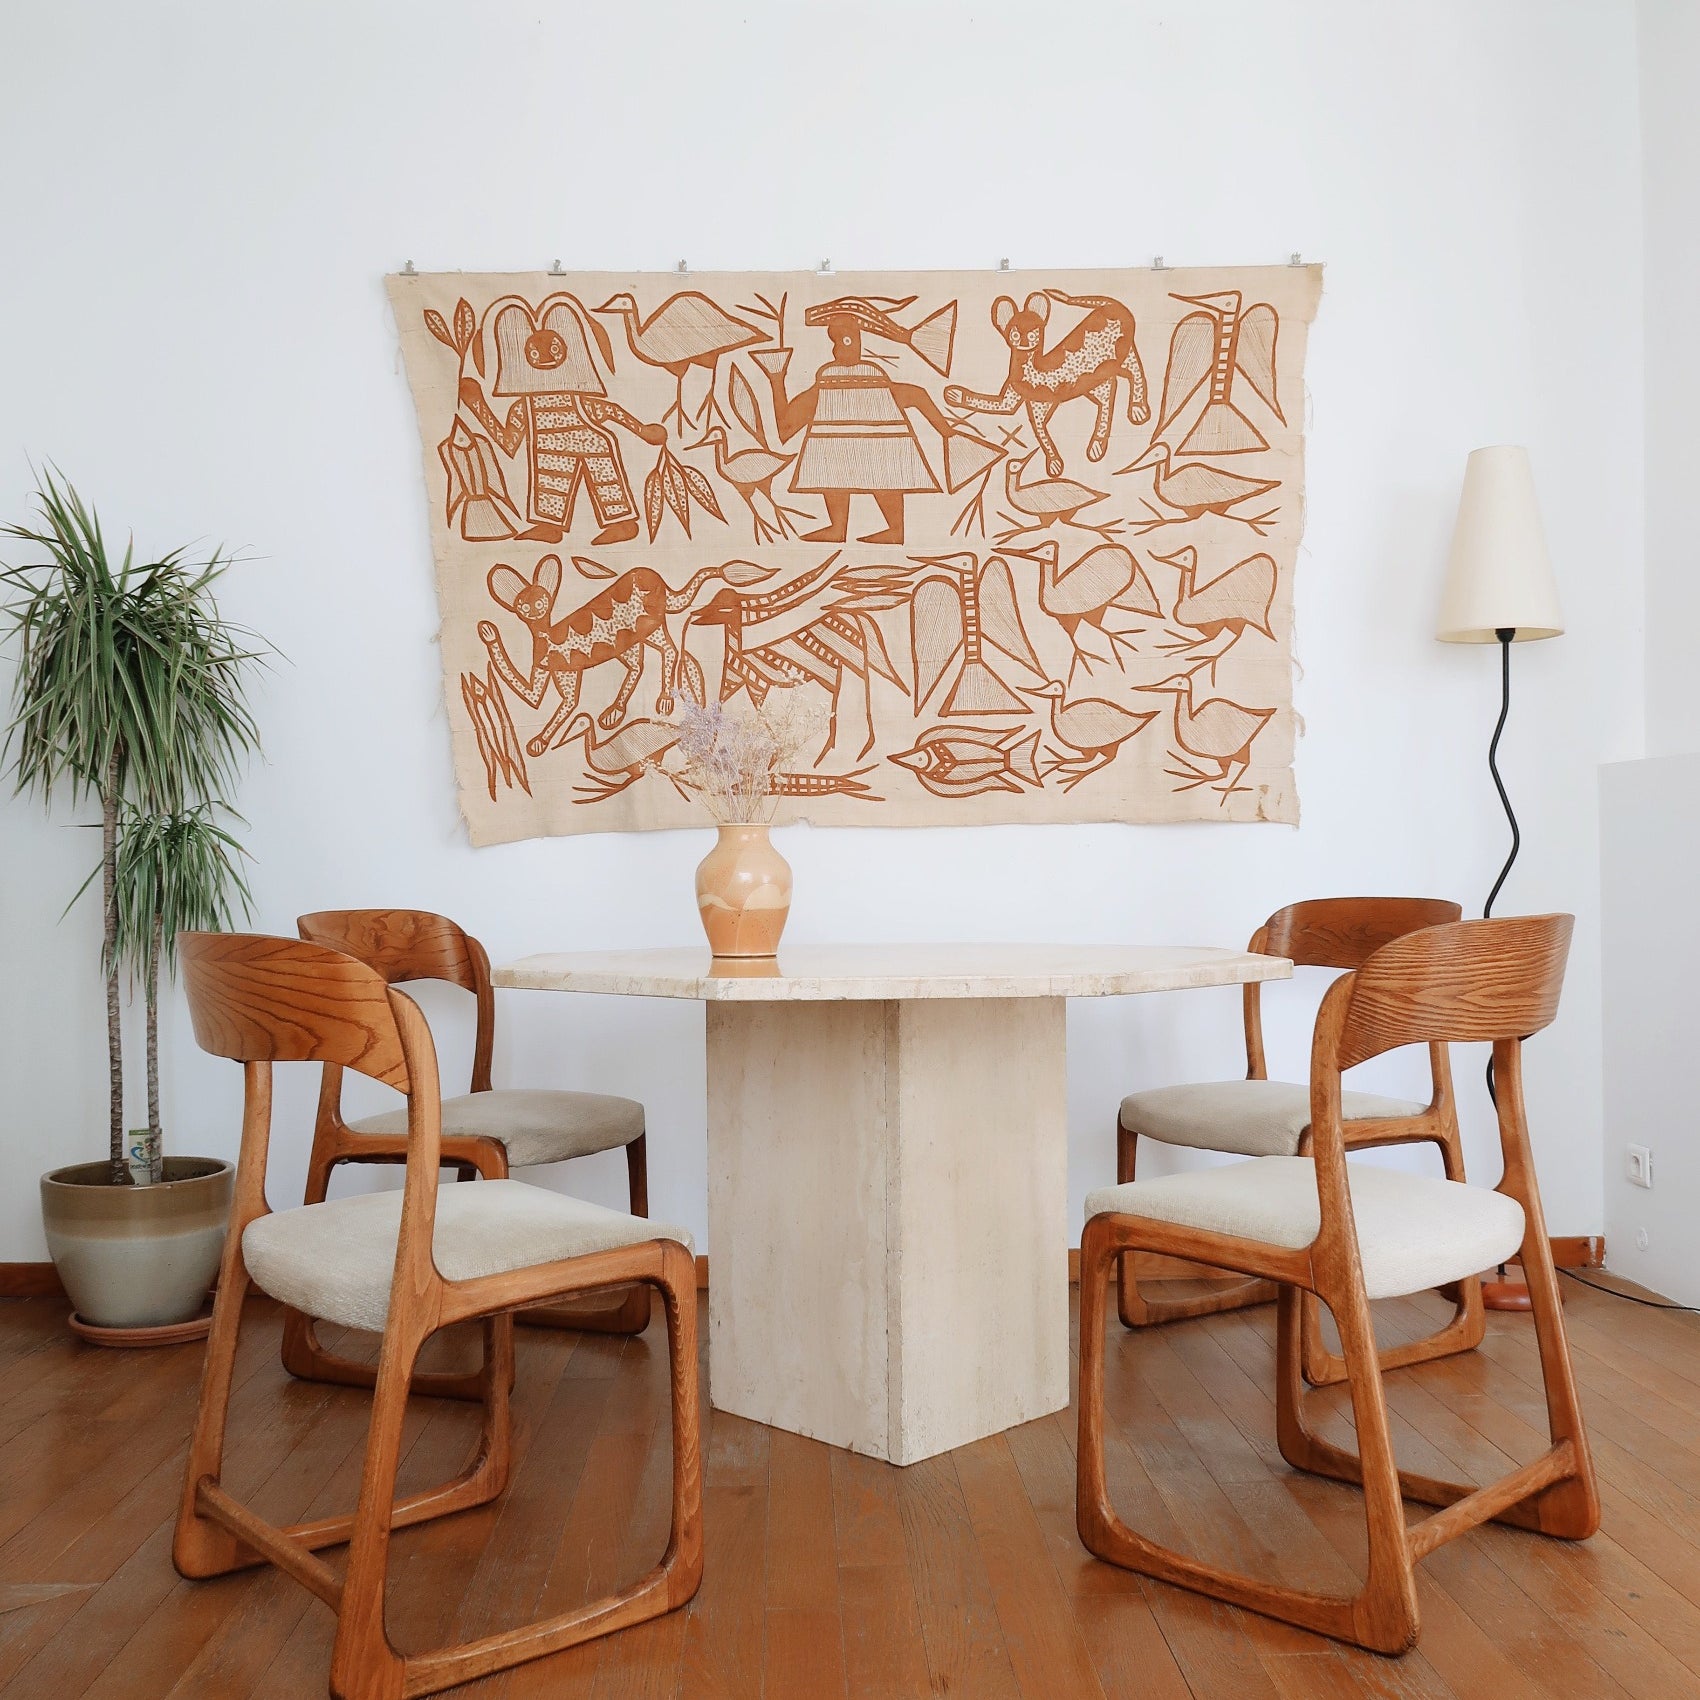 chaise traineau vintage baumann teck palissandre tissu beige bois scandinave danois brocante